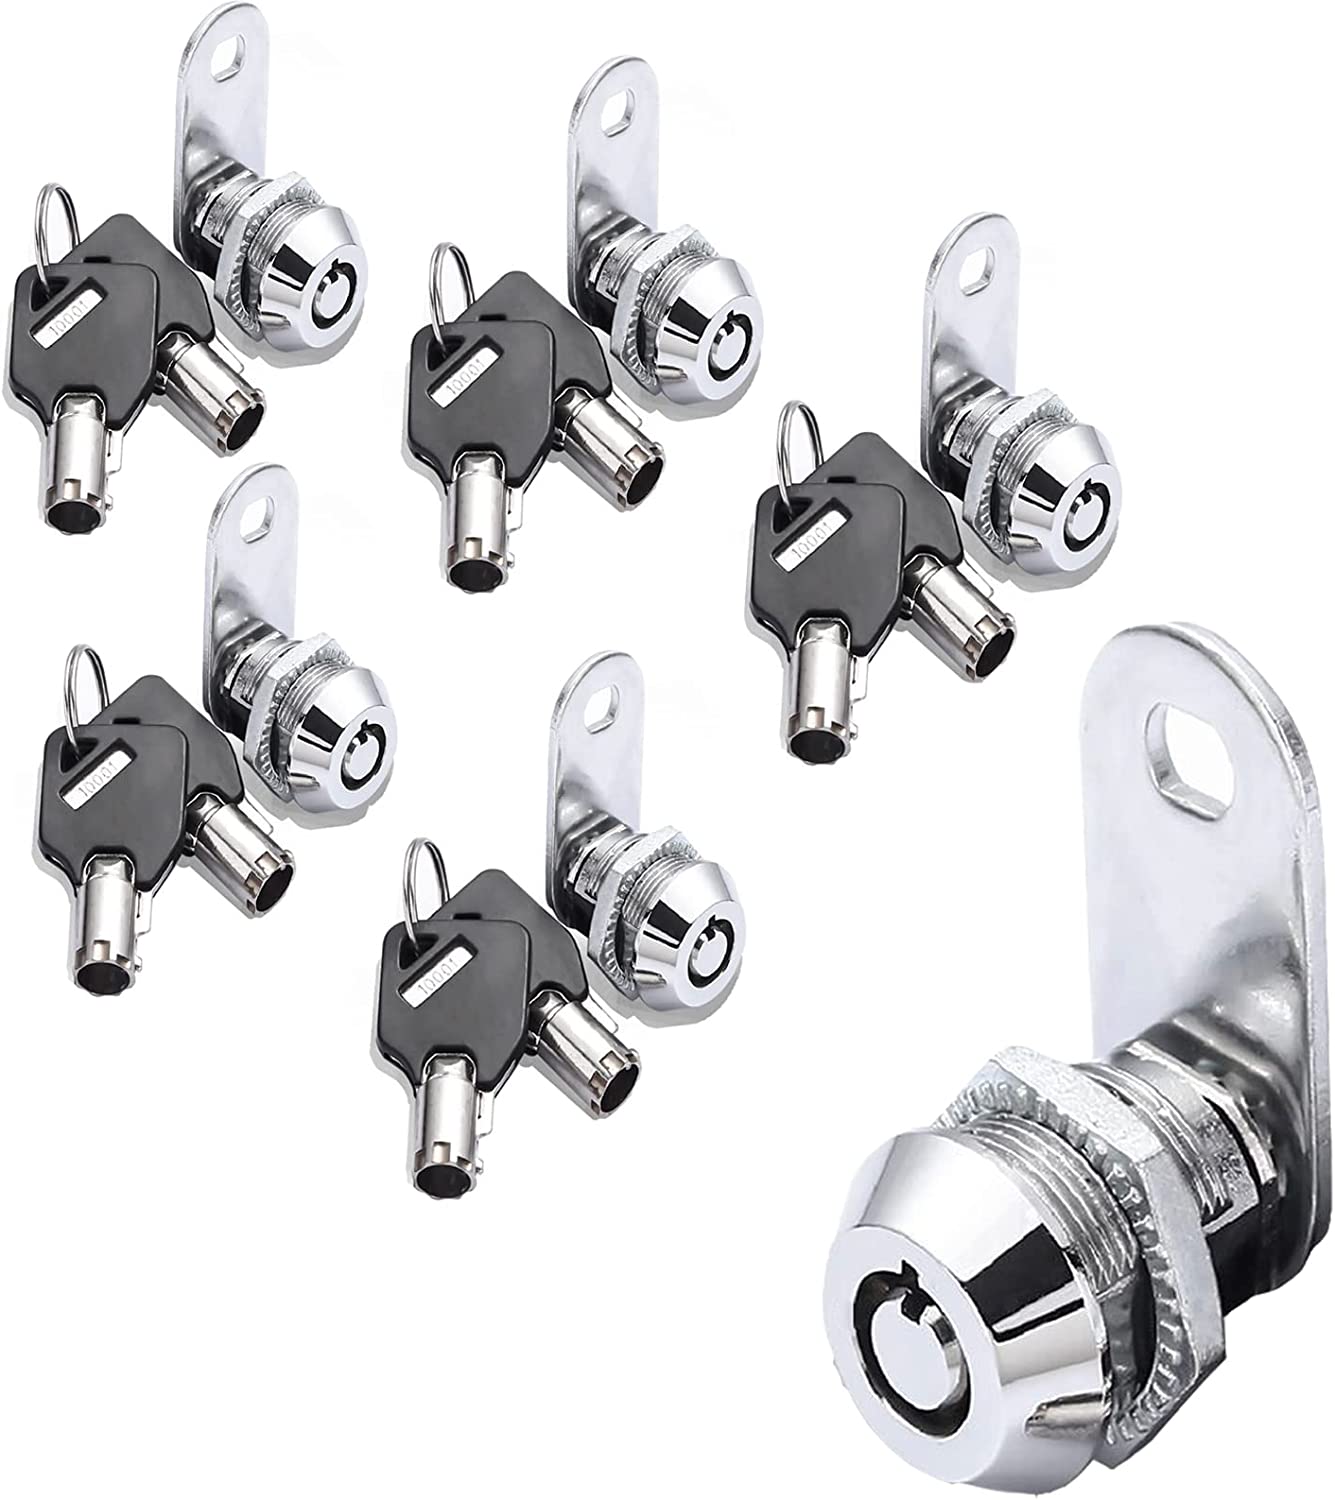 Details about   Tubular Cam Lock with 5/8" Cylinder and Chrome Finish Keyed Alike with 2 Keys, 